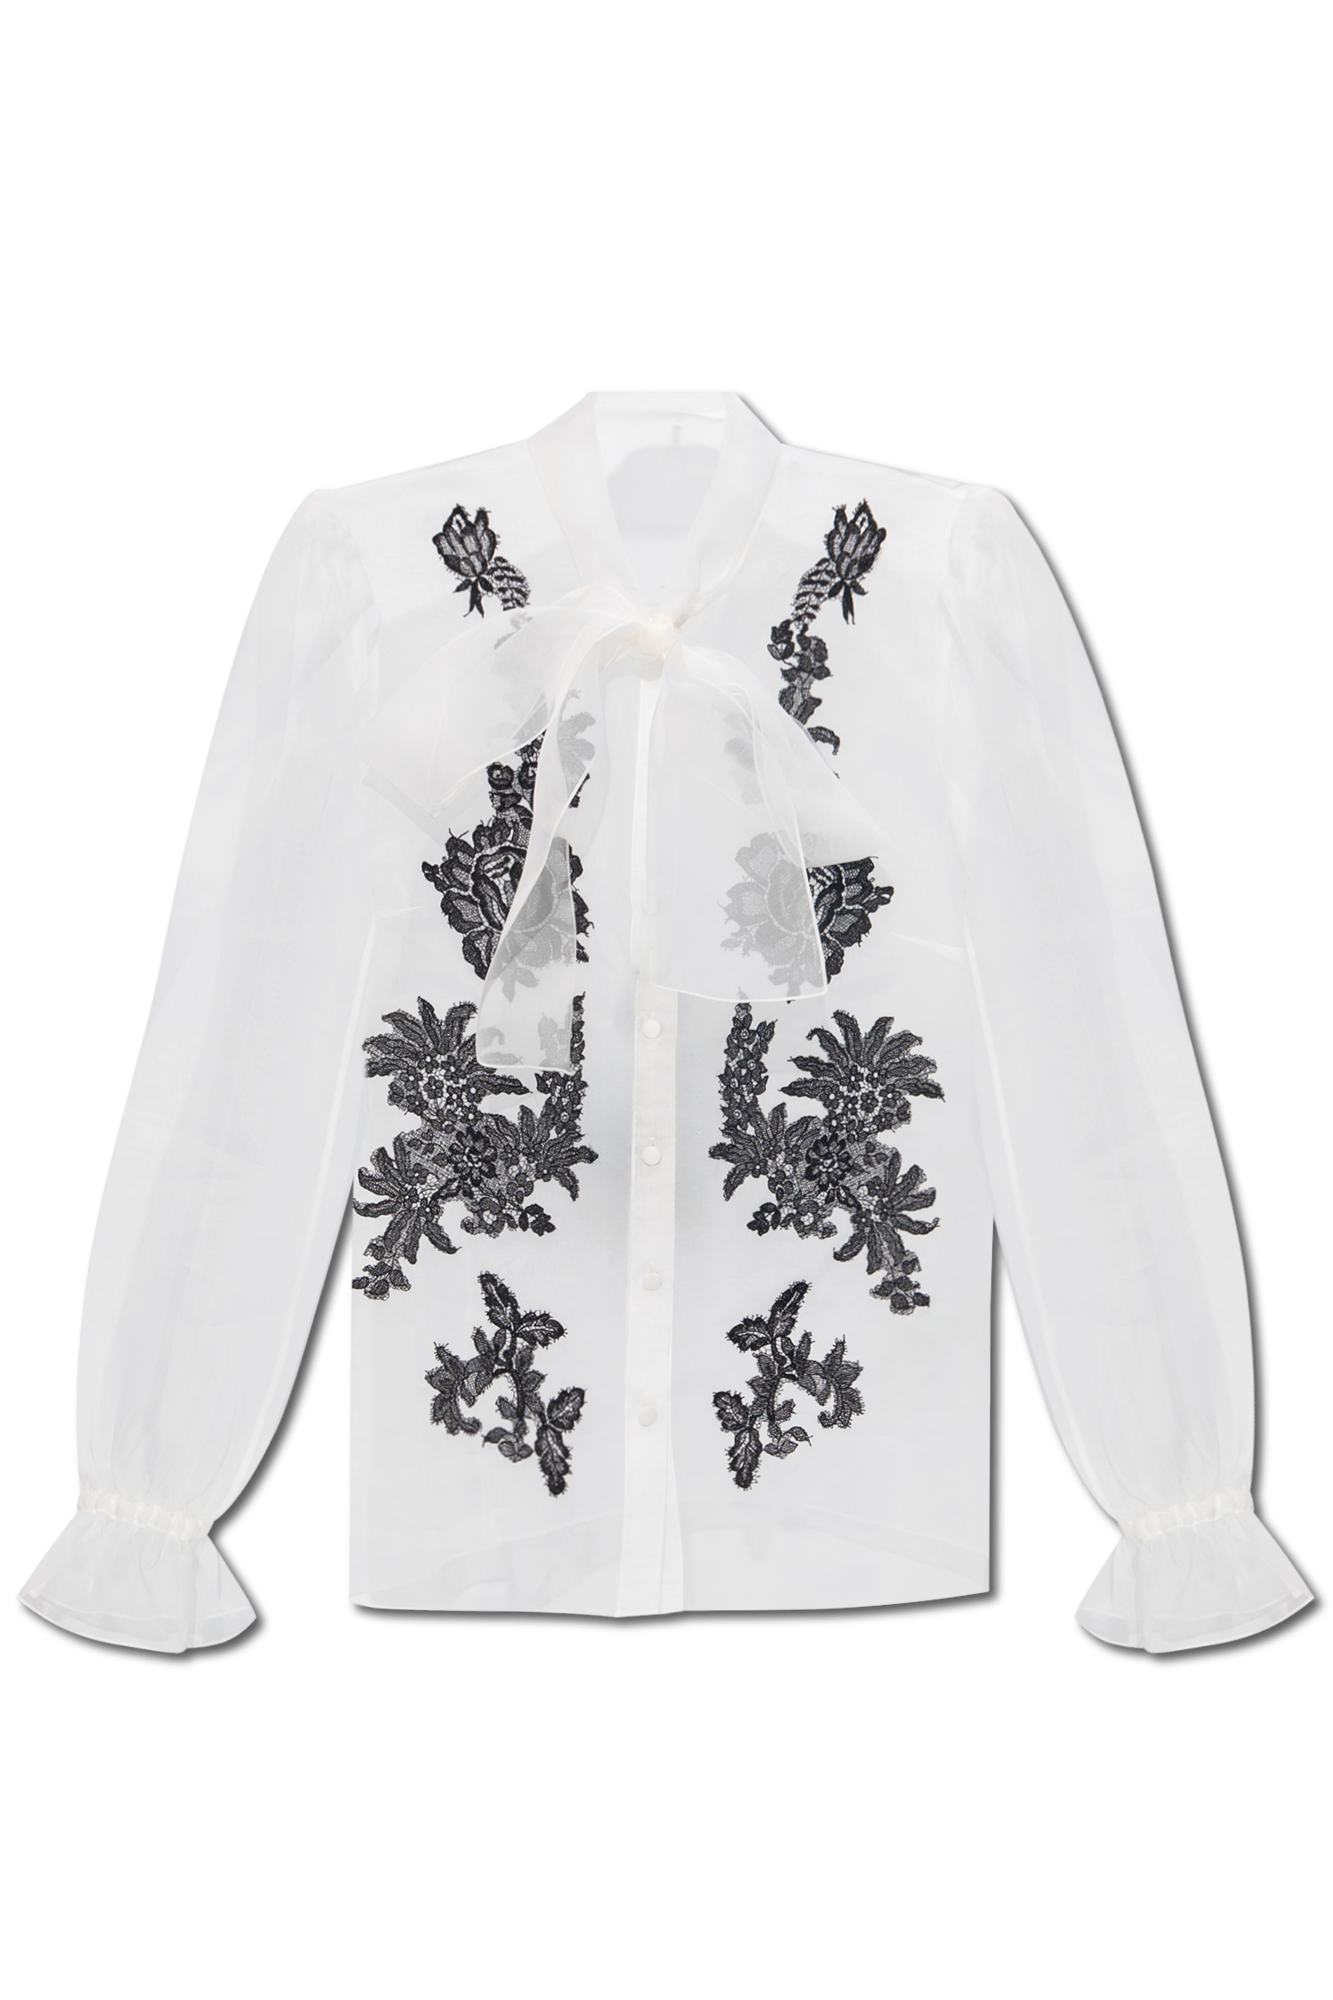 Dolce & Gabbana Transparent shirt